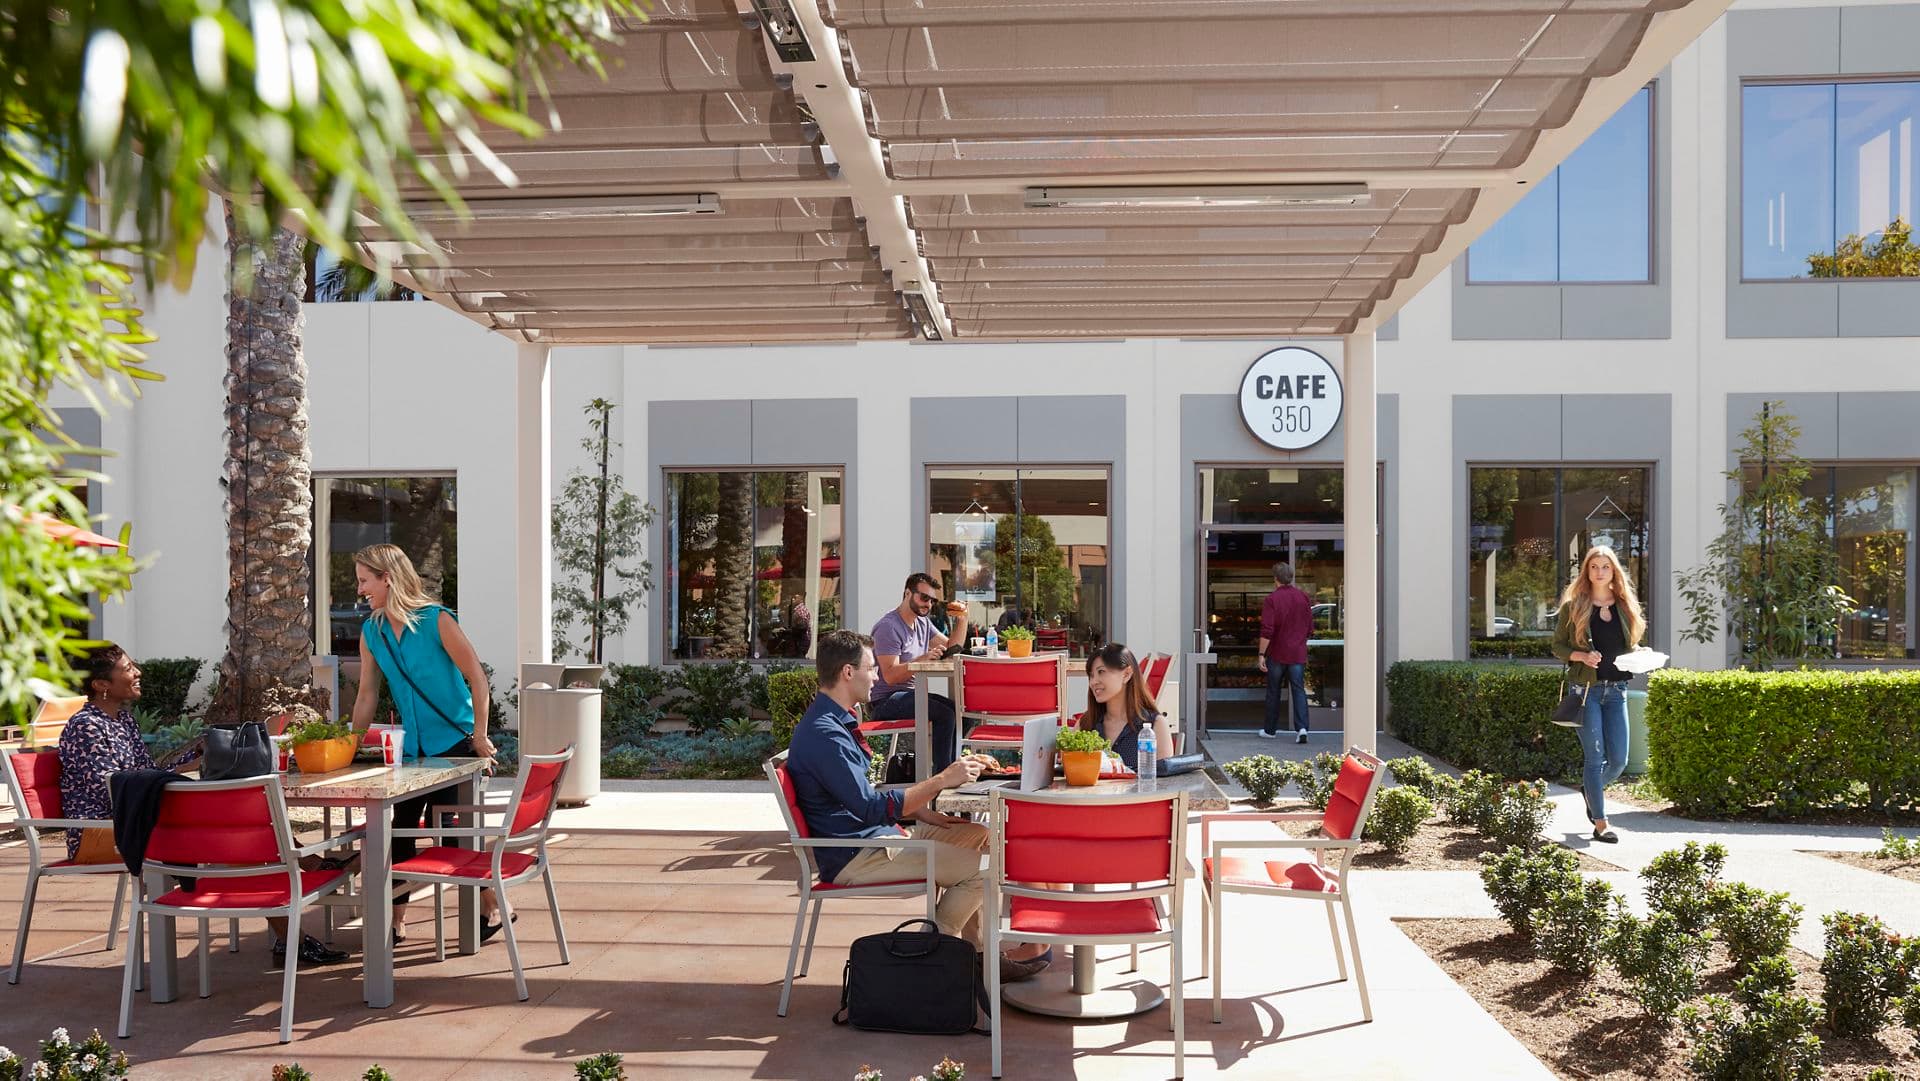  Cafe 350 - Market Place Center -  350 Commerce, Irvine, CA 92602